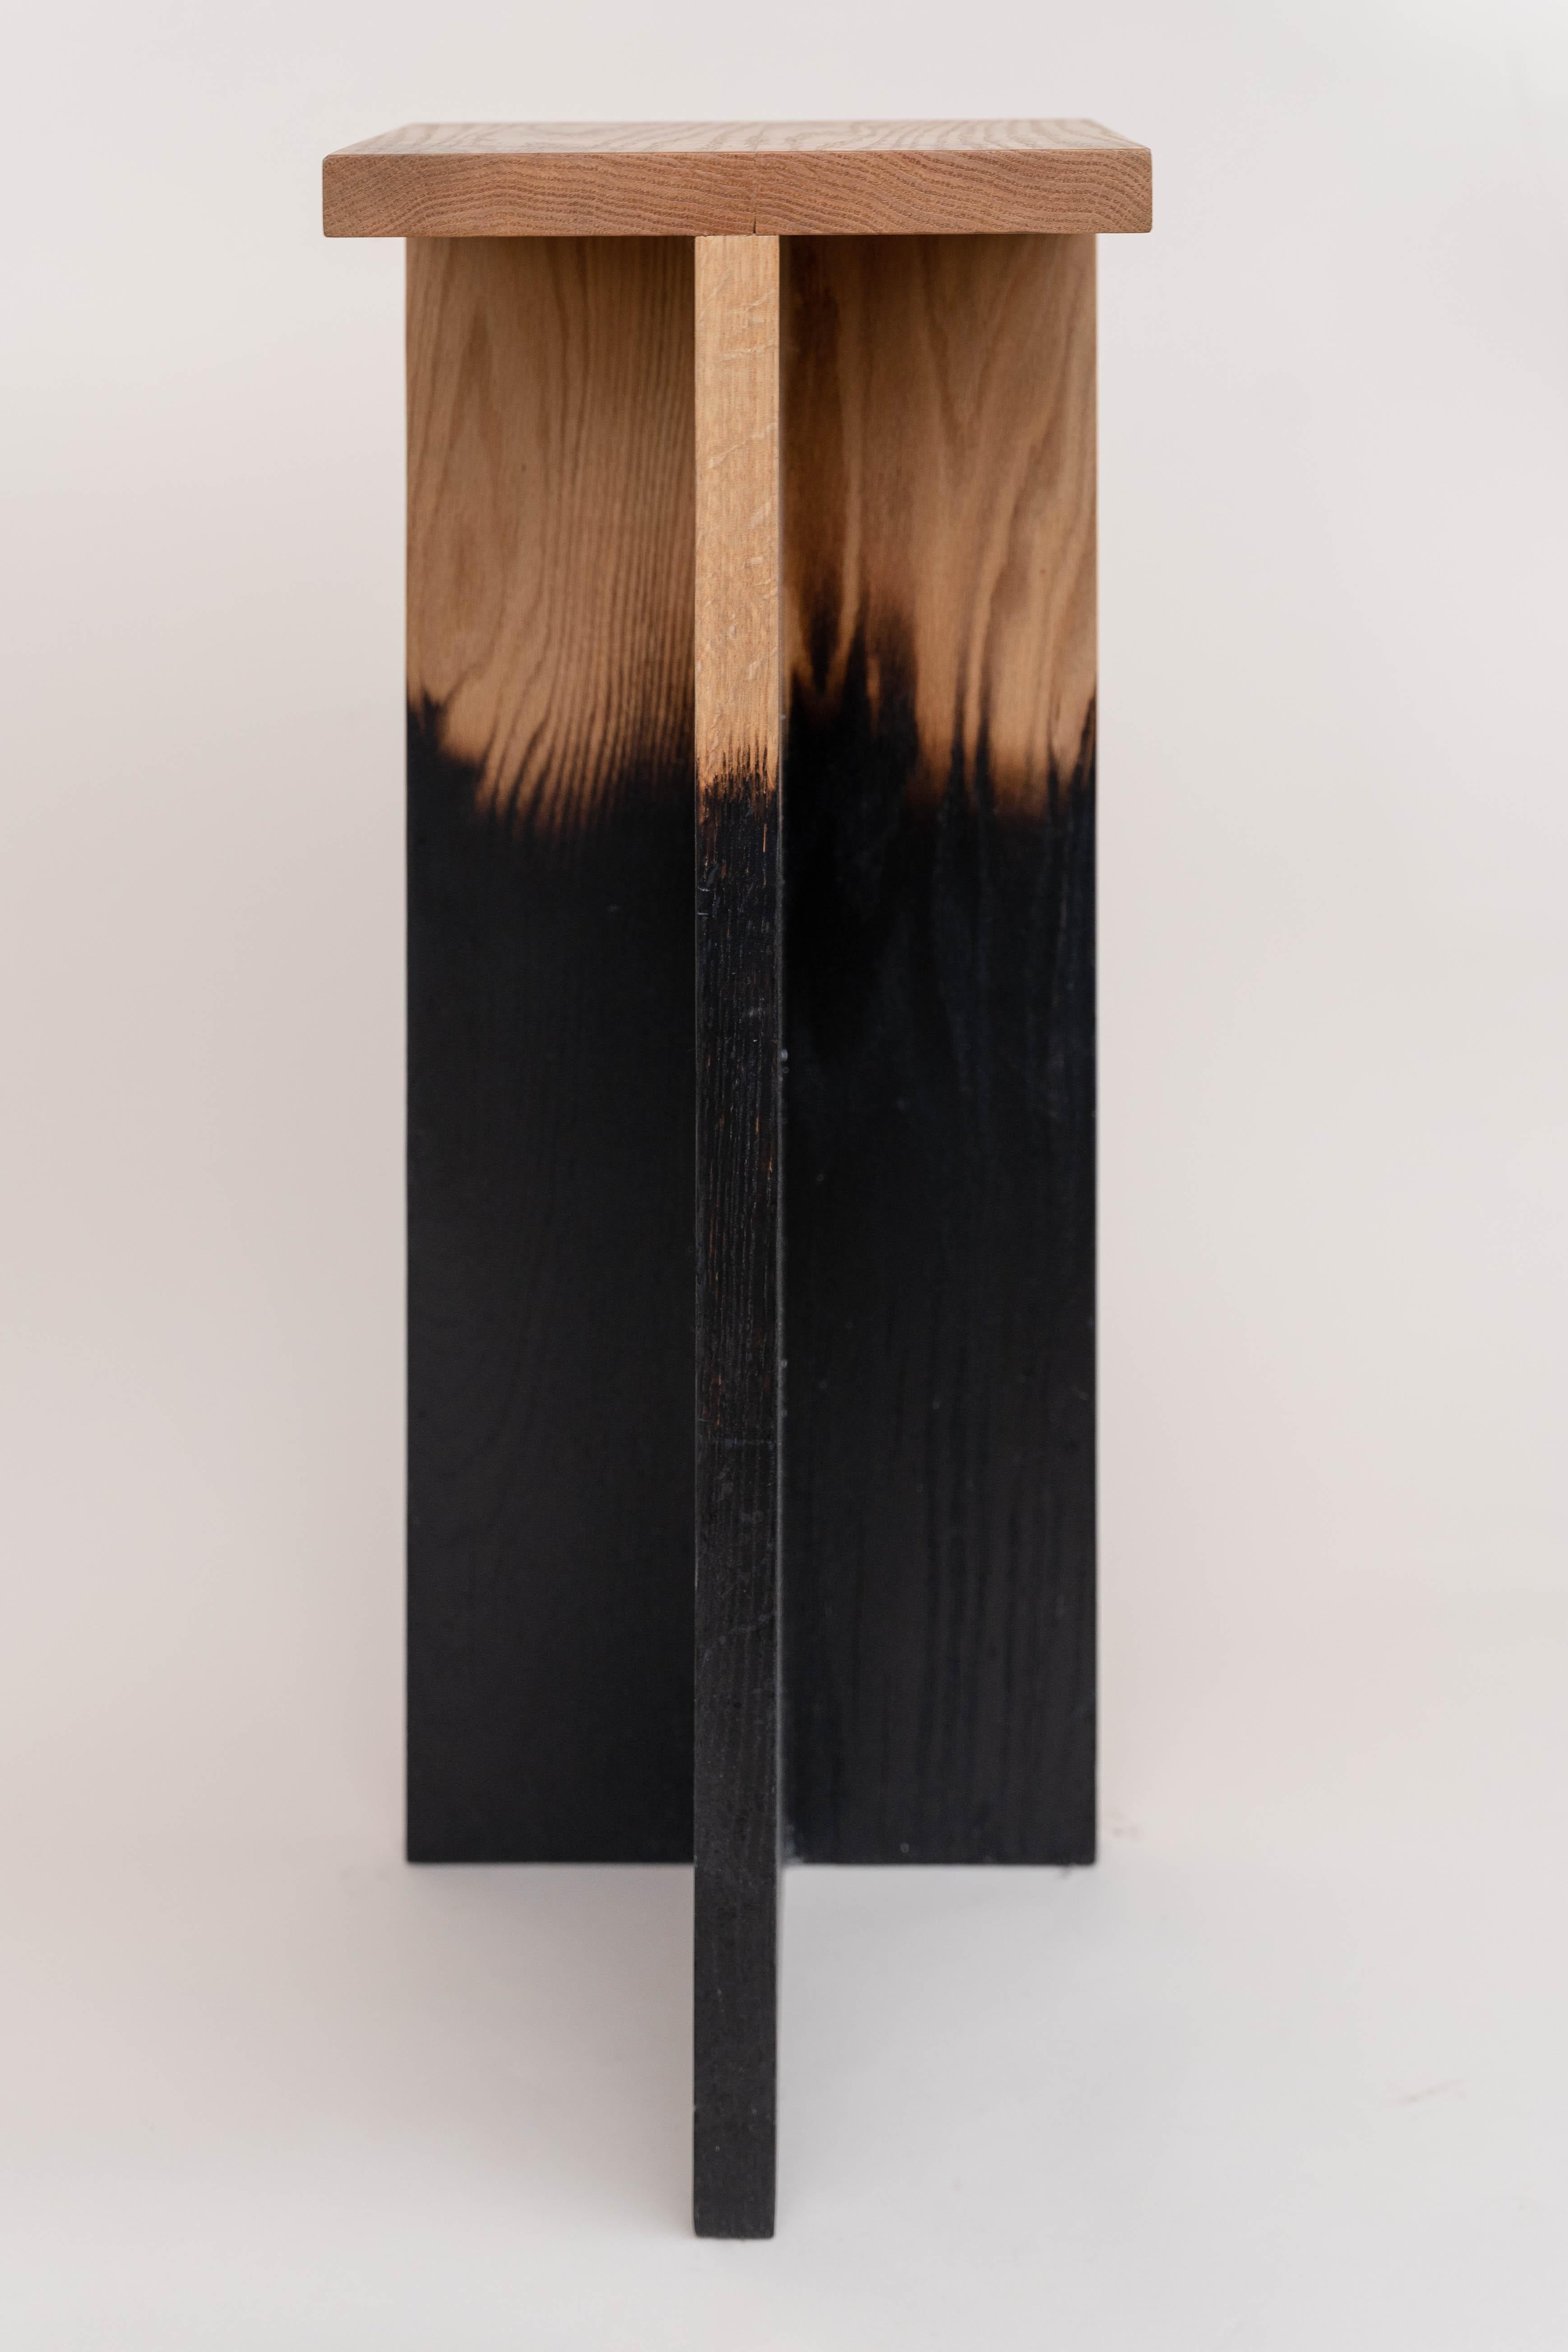 Other High Burnt Oak Stool by Daniel Elkayam For Sale